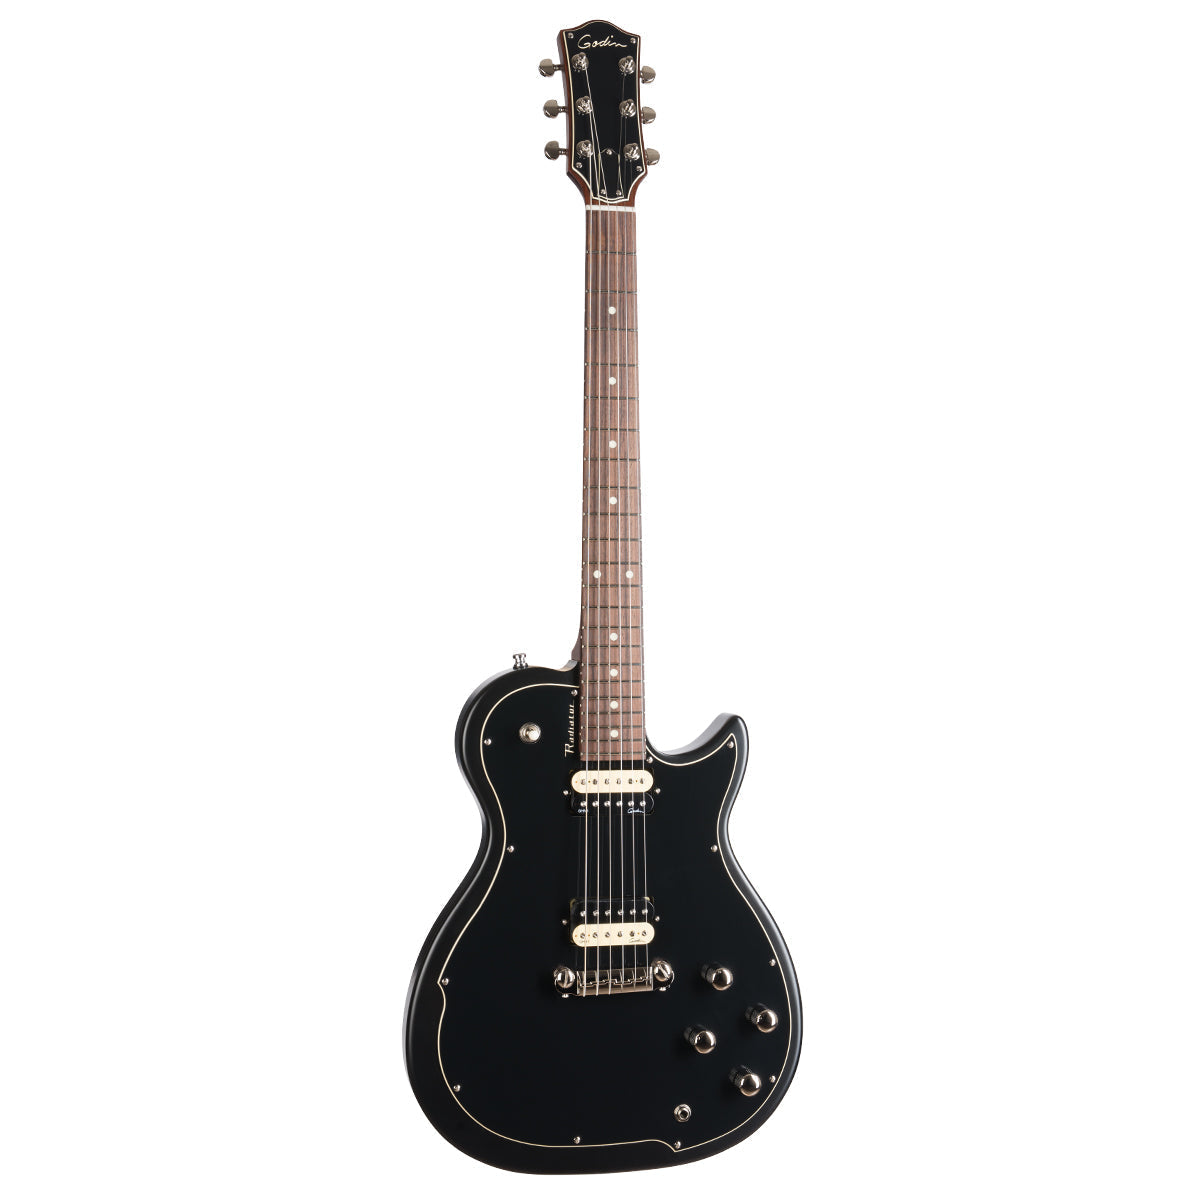 Godin Radiator Electric Guitar ~ Matte Black RN, Electric Guitar for sale at Richards Guitars.